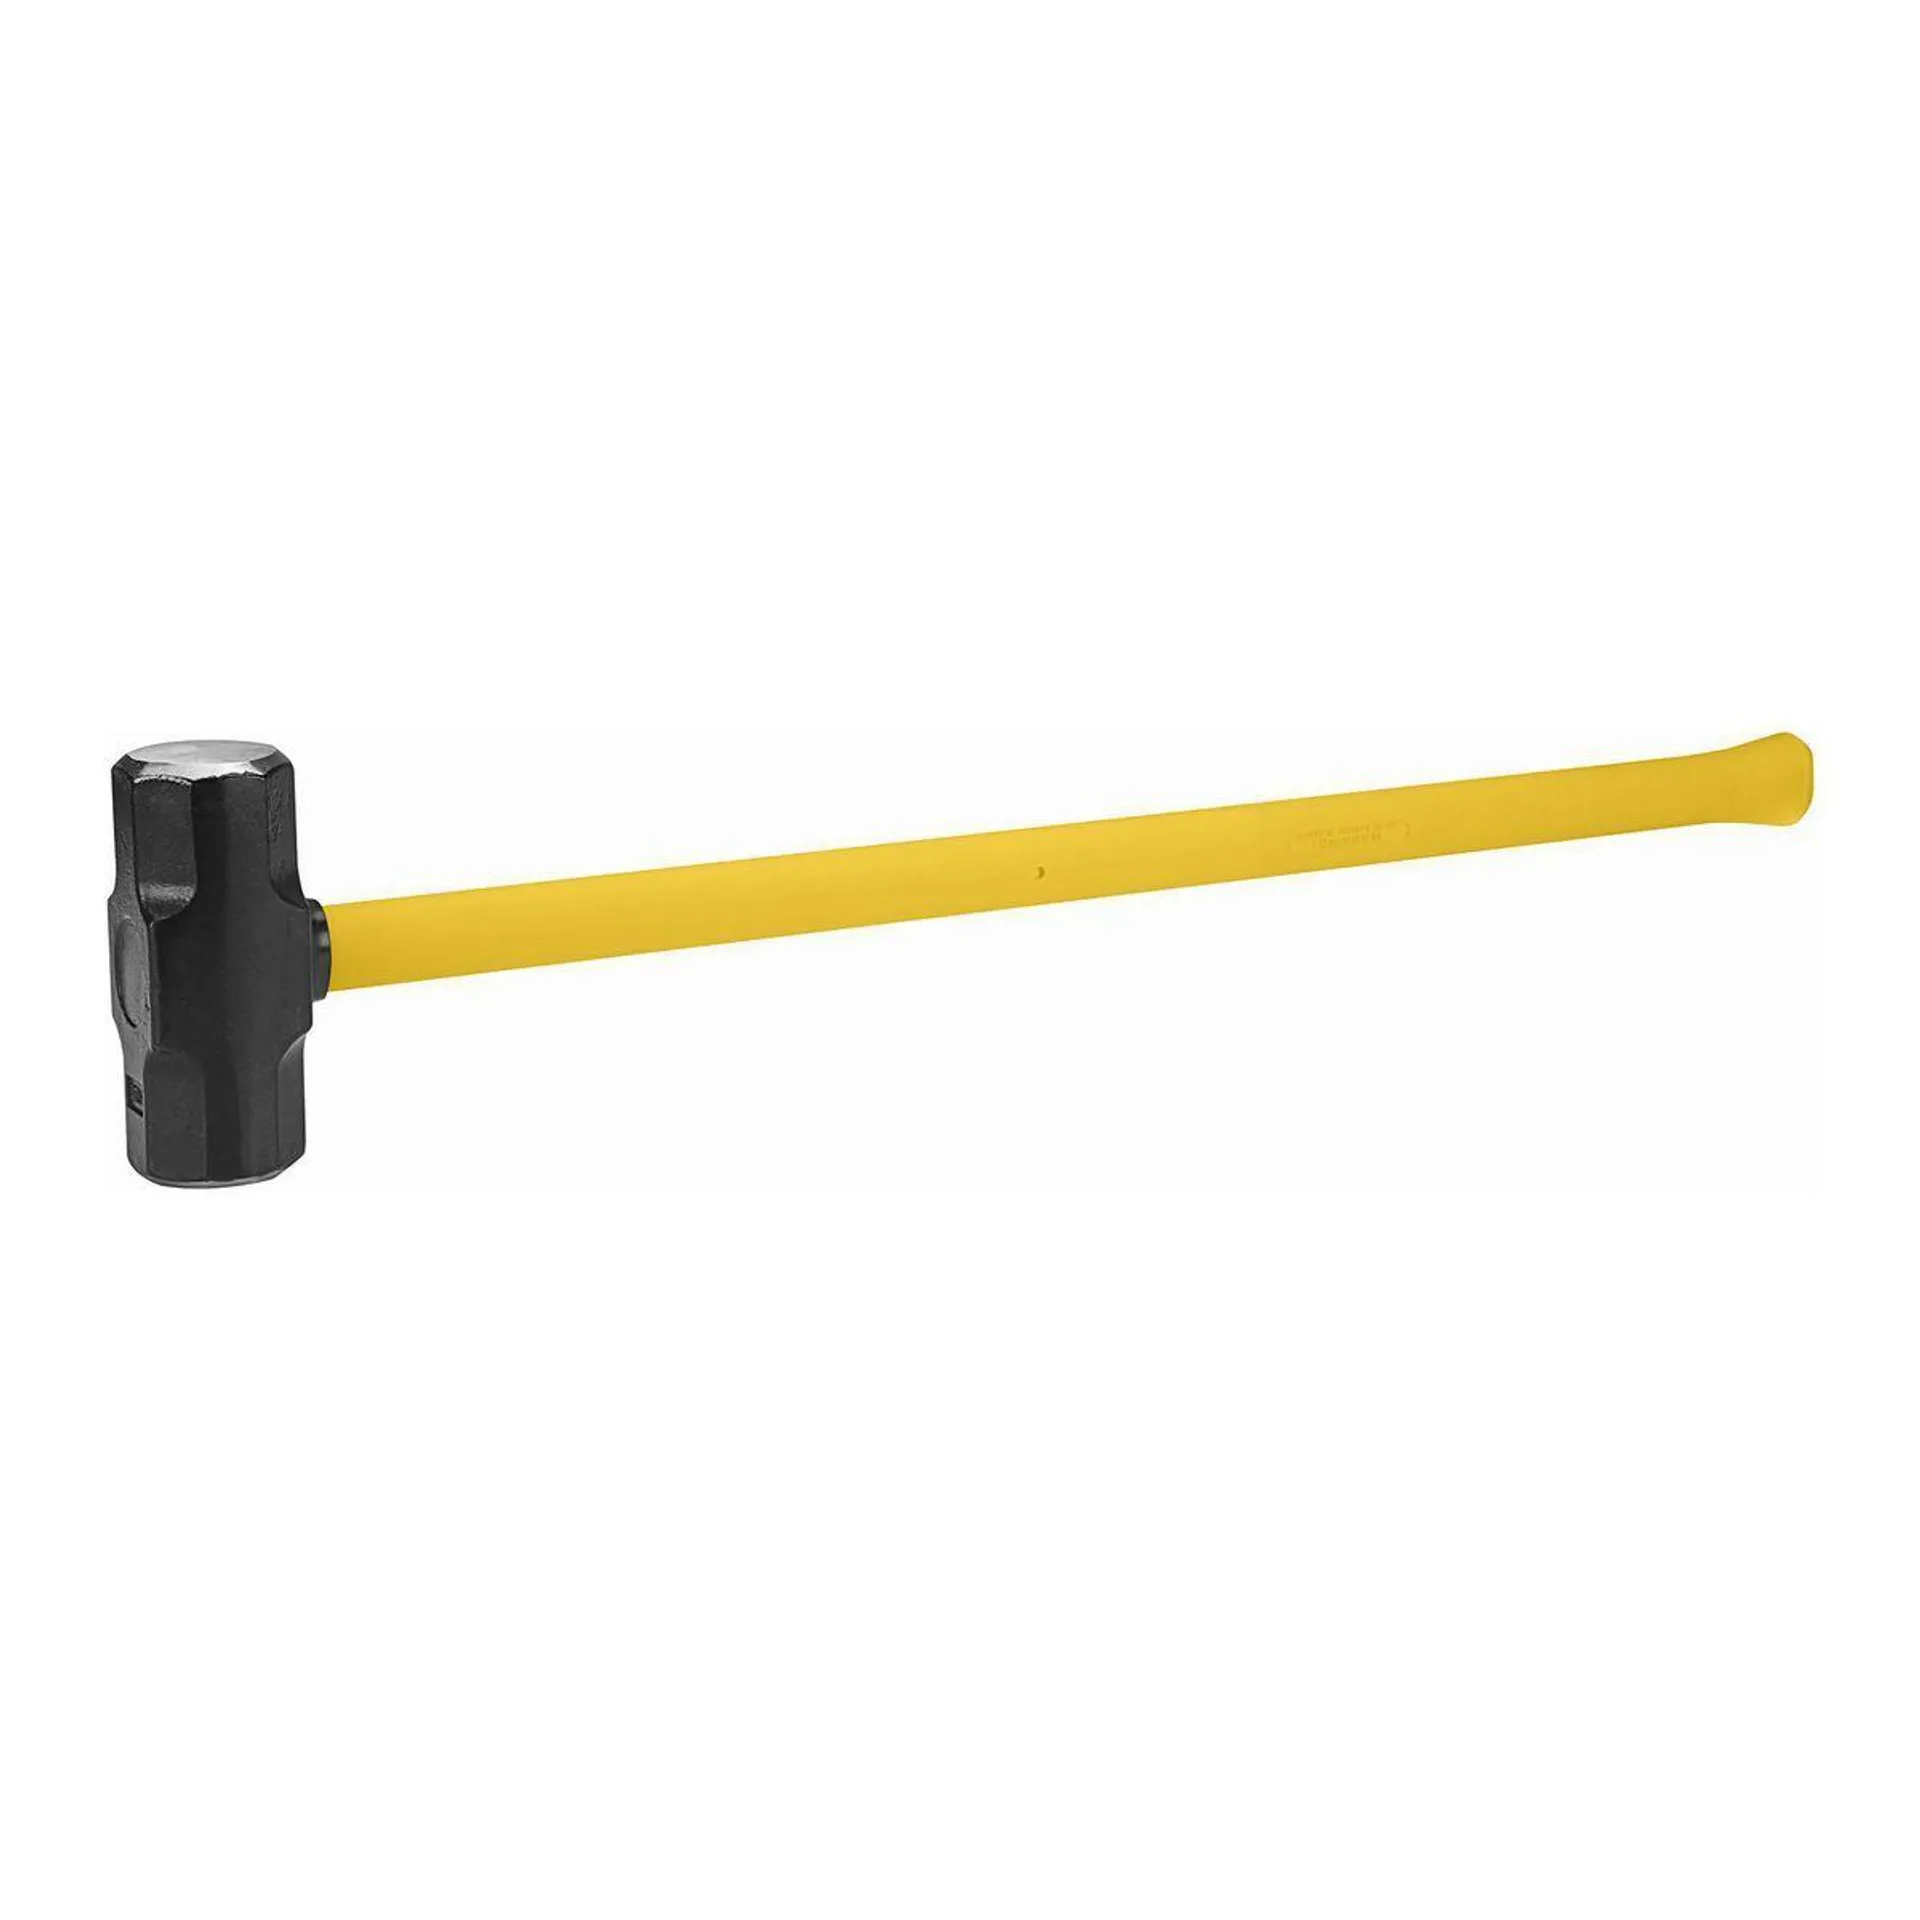 PITTSBURGH 10 lb. Fiberglass Sledge Hammer